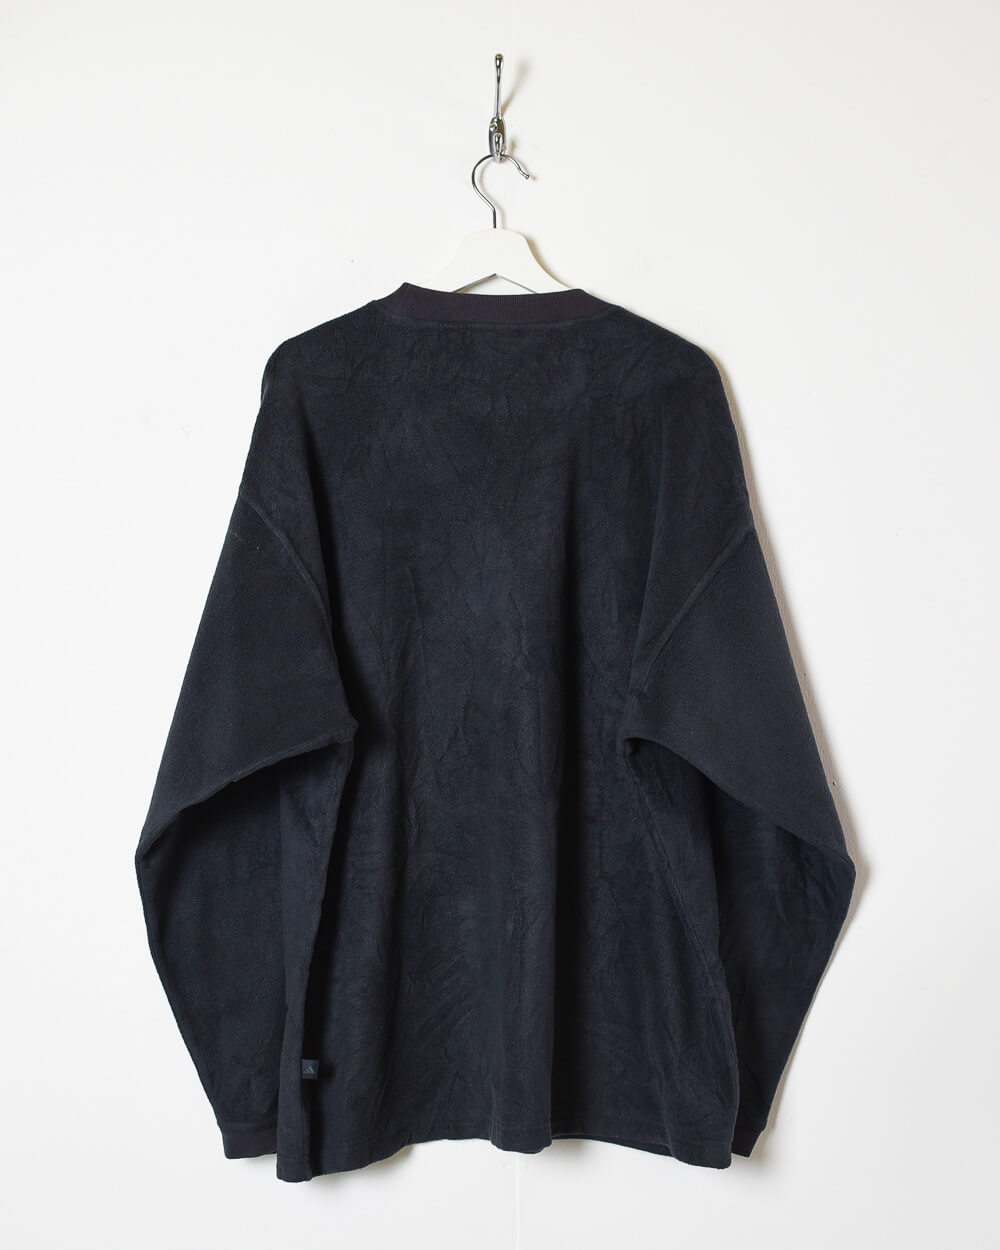 Black Adidas Pullover Fleece - X-Large